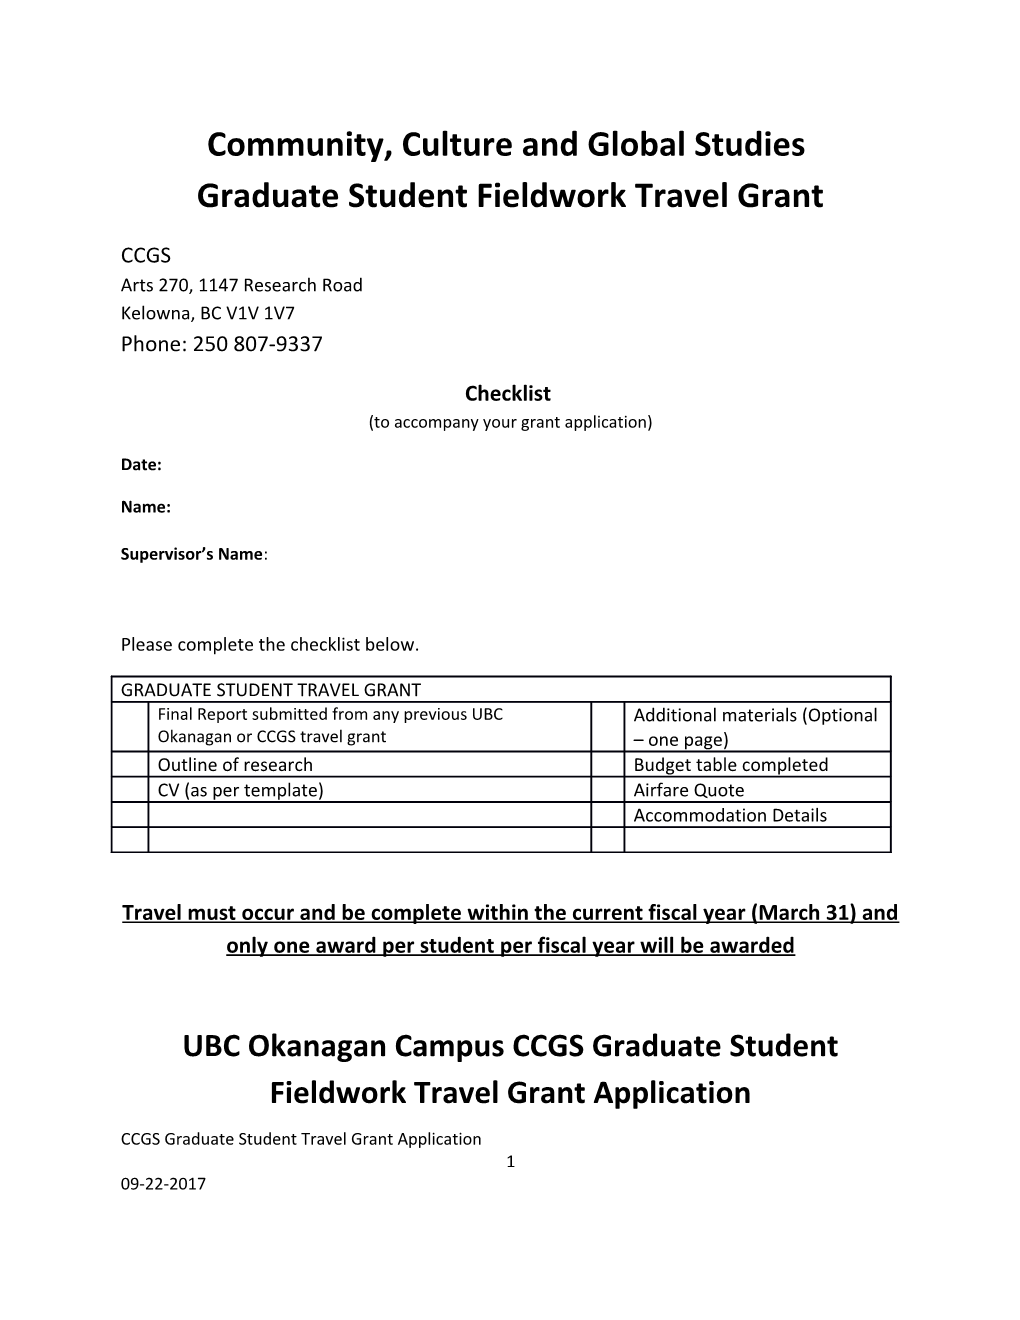 Community, Culture and Global Studies Graduate Student Fieldwork Travel Grant